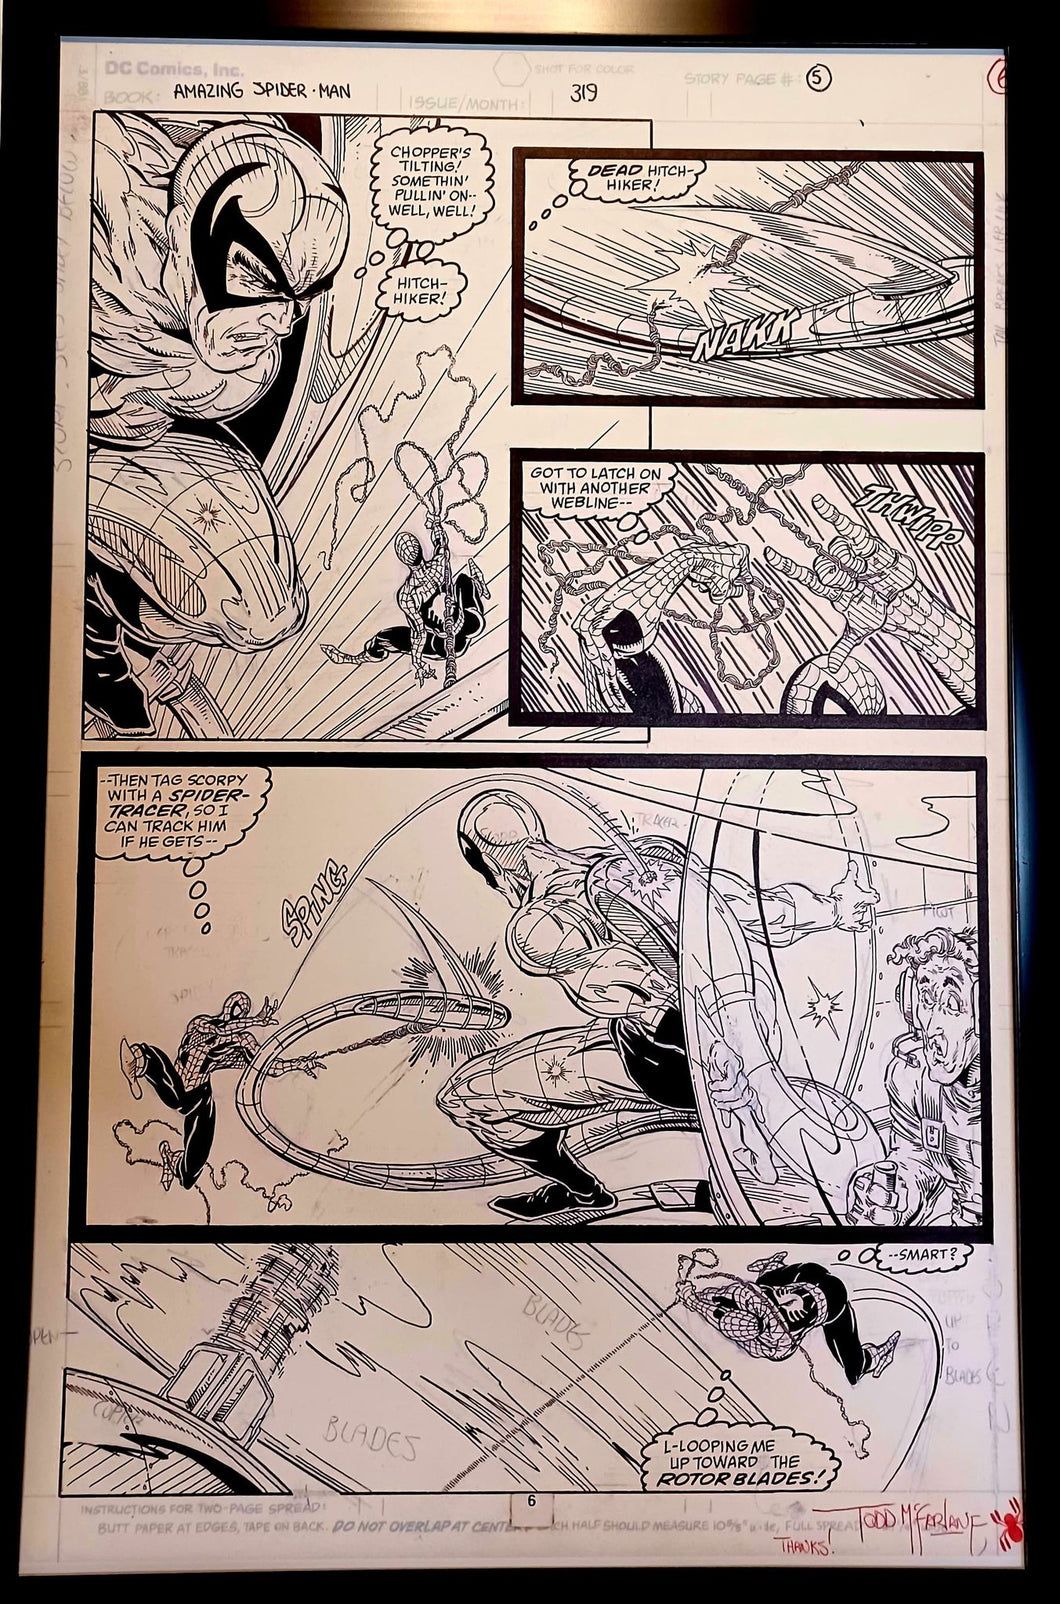 Amazing Spider-Man #319 pg. 5 by Todd McFarlane 11x17 FRAMED Original Art Print Comic Poster